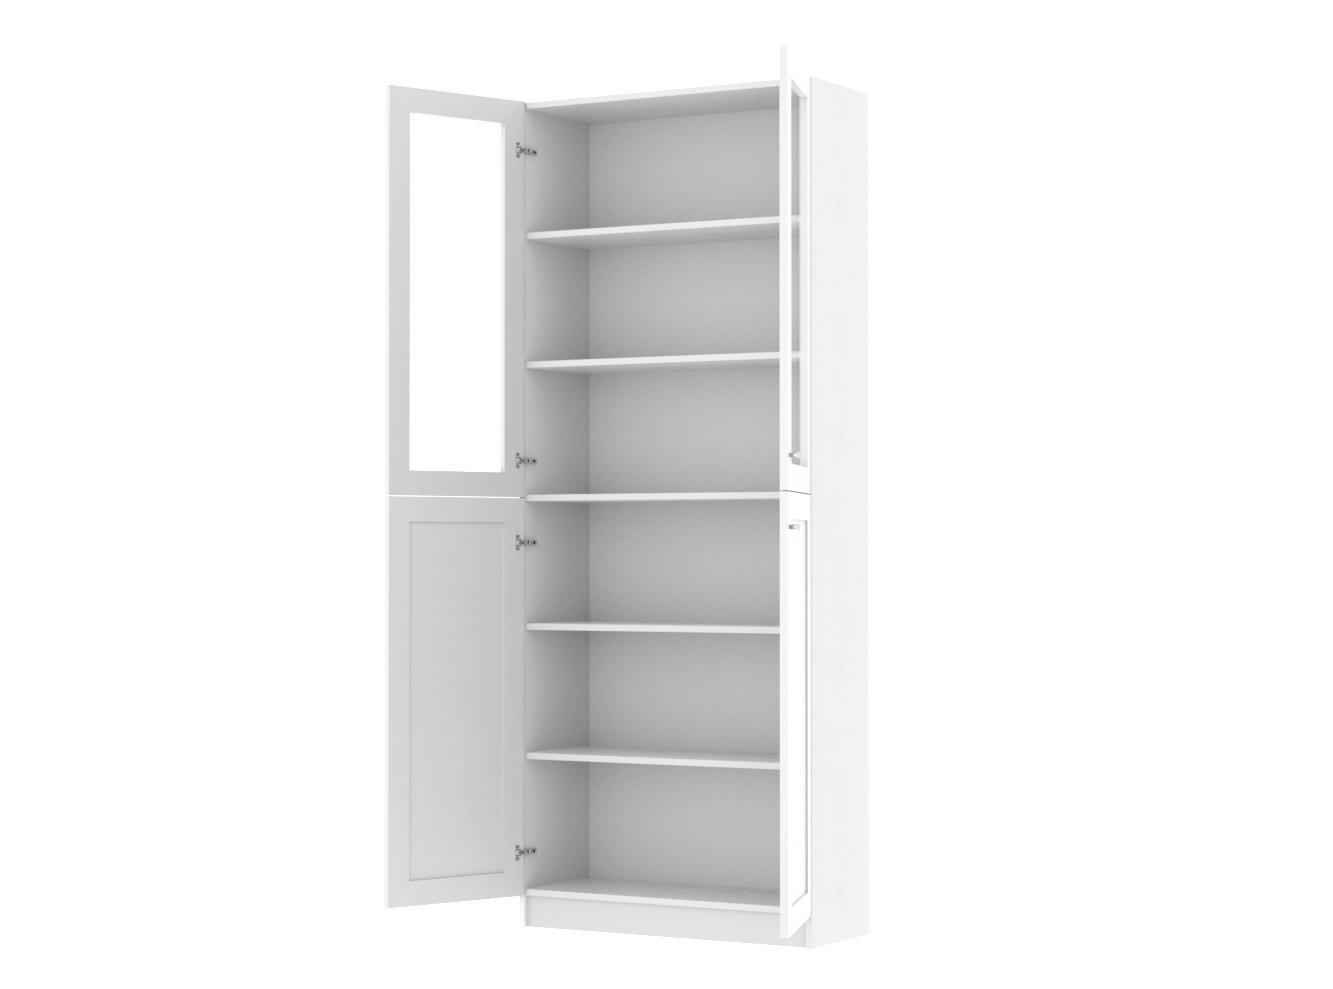  Книжный шкаф Билли 334 white ИКЕА (IKEA) изображение товара